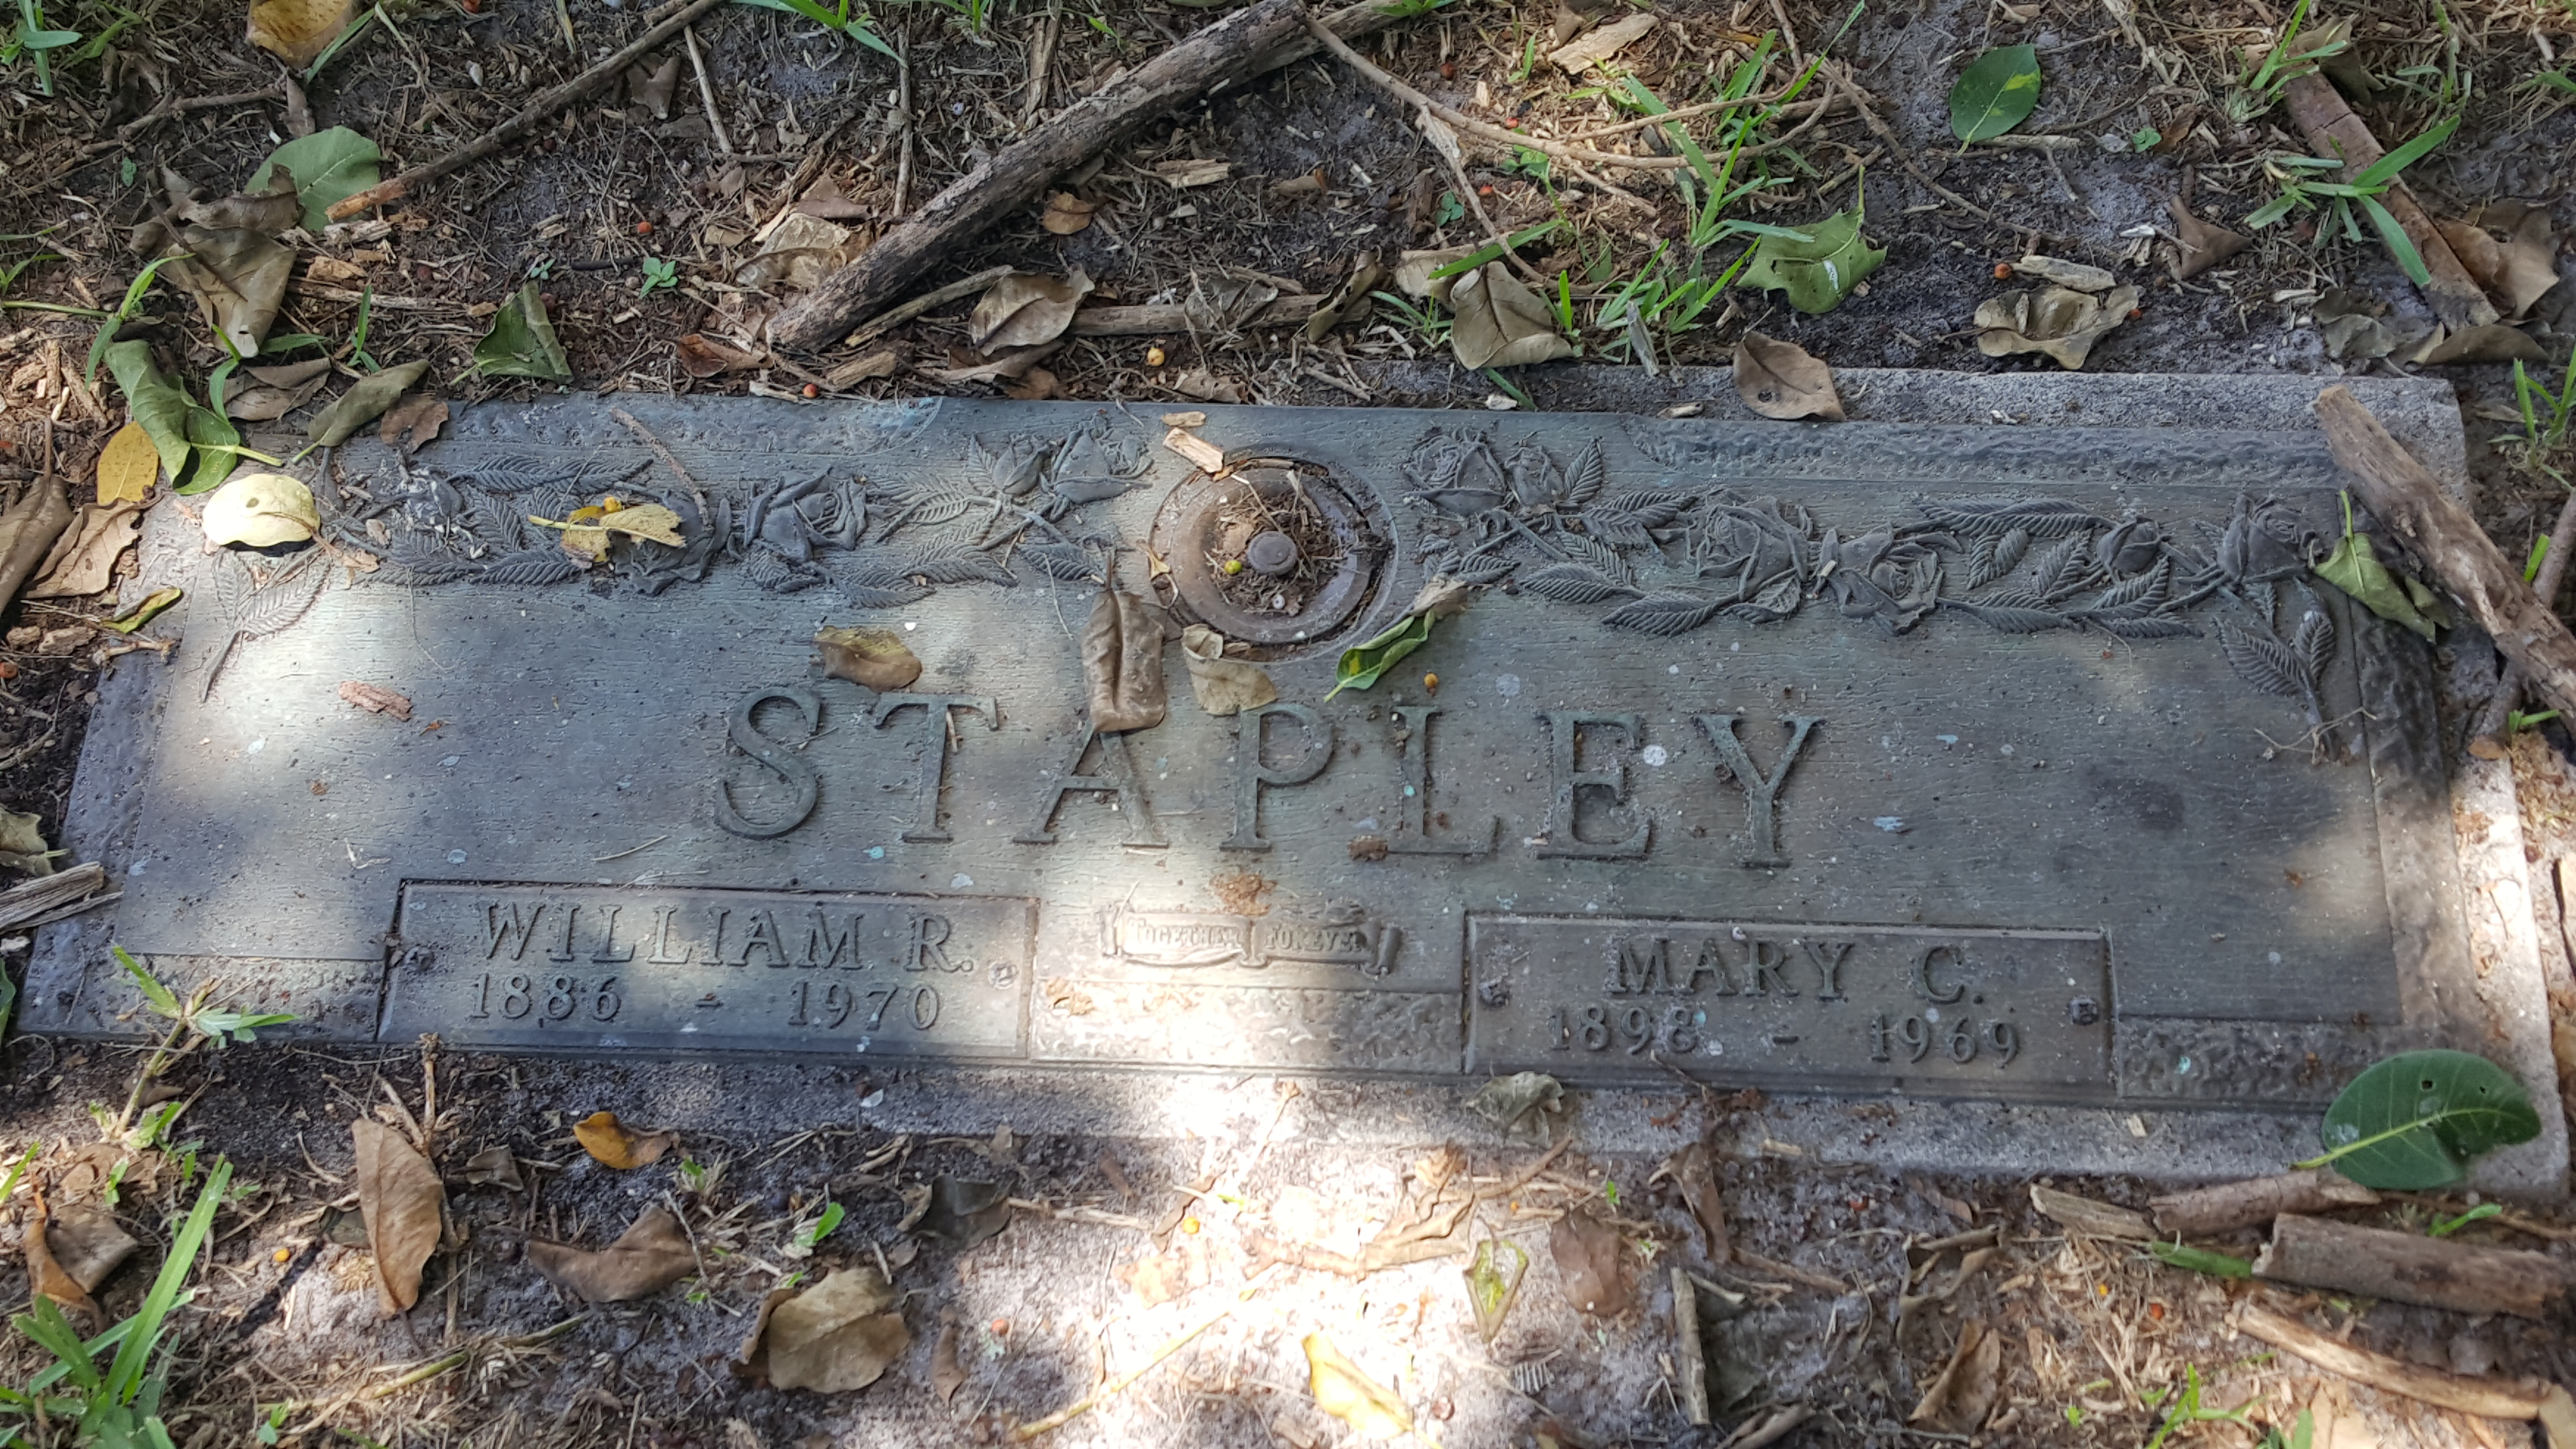 Mary C Stapley